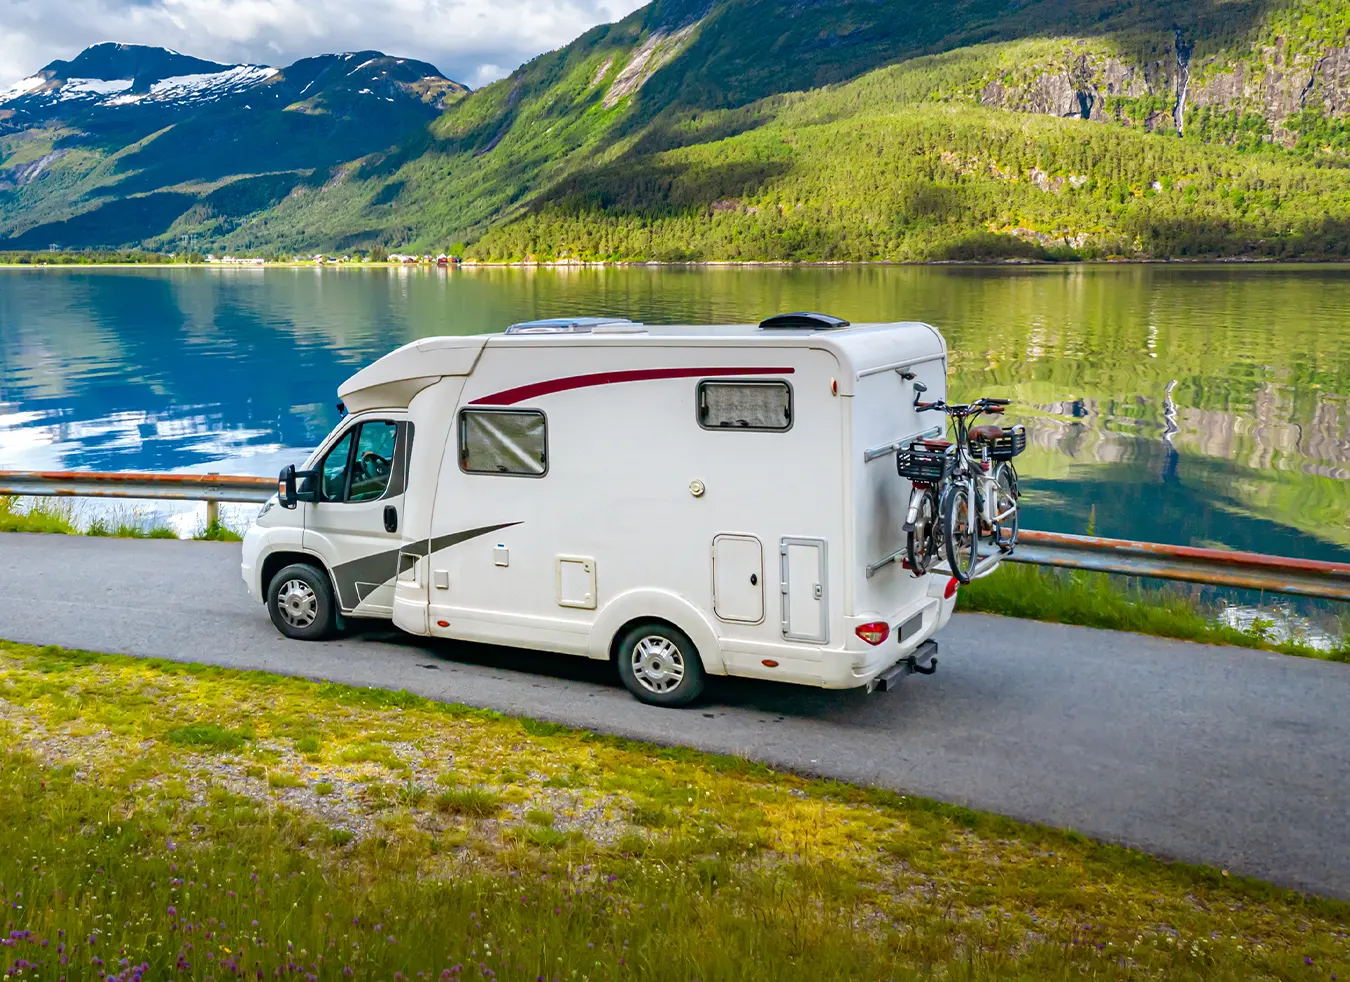 Organiser un tour du monde en camping-car